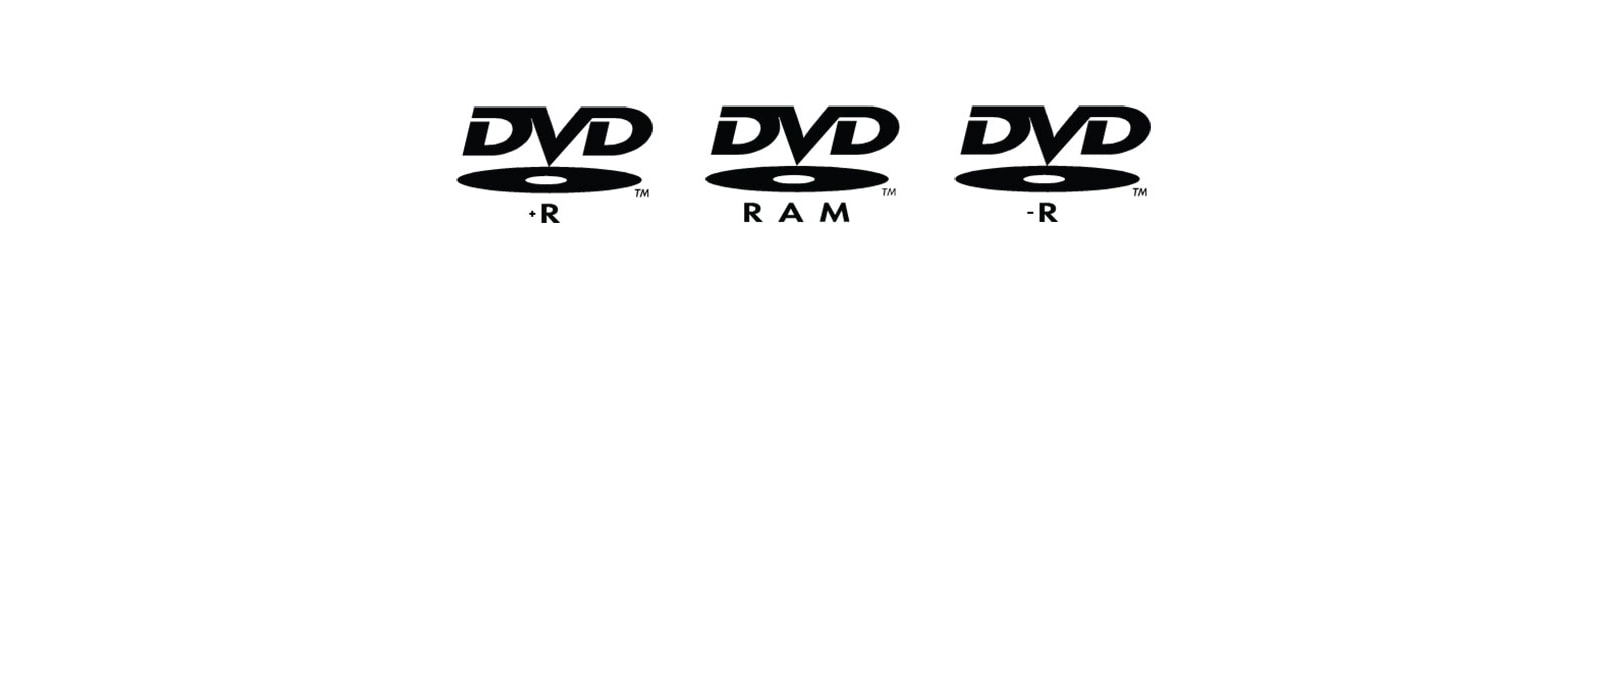 Lg Slim Portable Dvd Writer Dvd Disc Playback Dvd M Disc Support Sp80nb80 Lg Usa